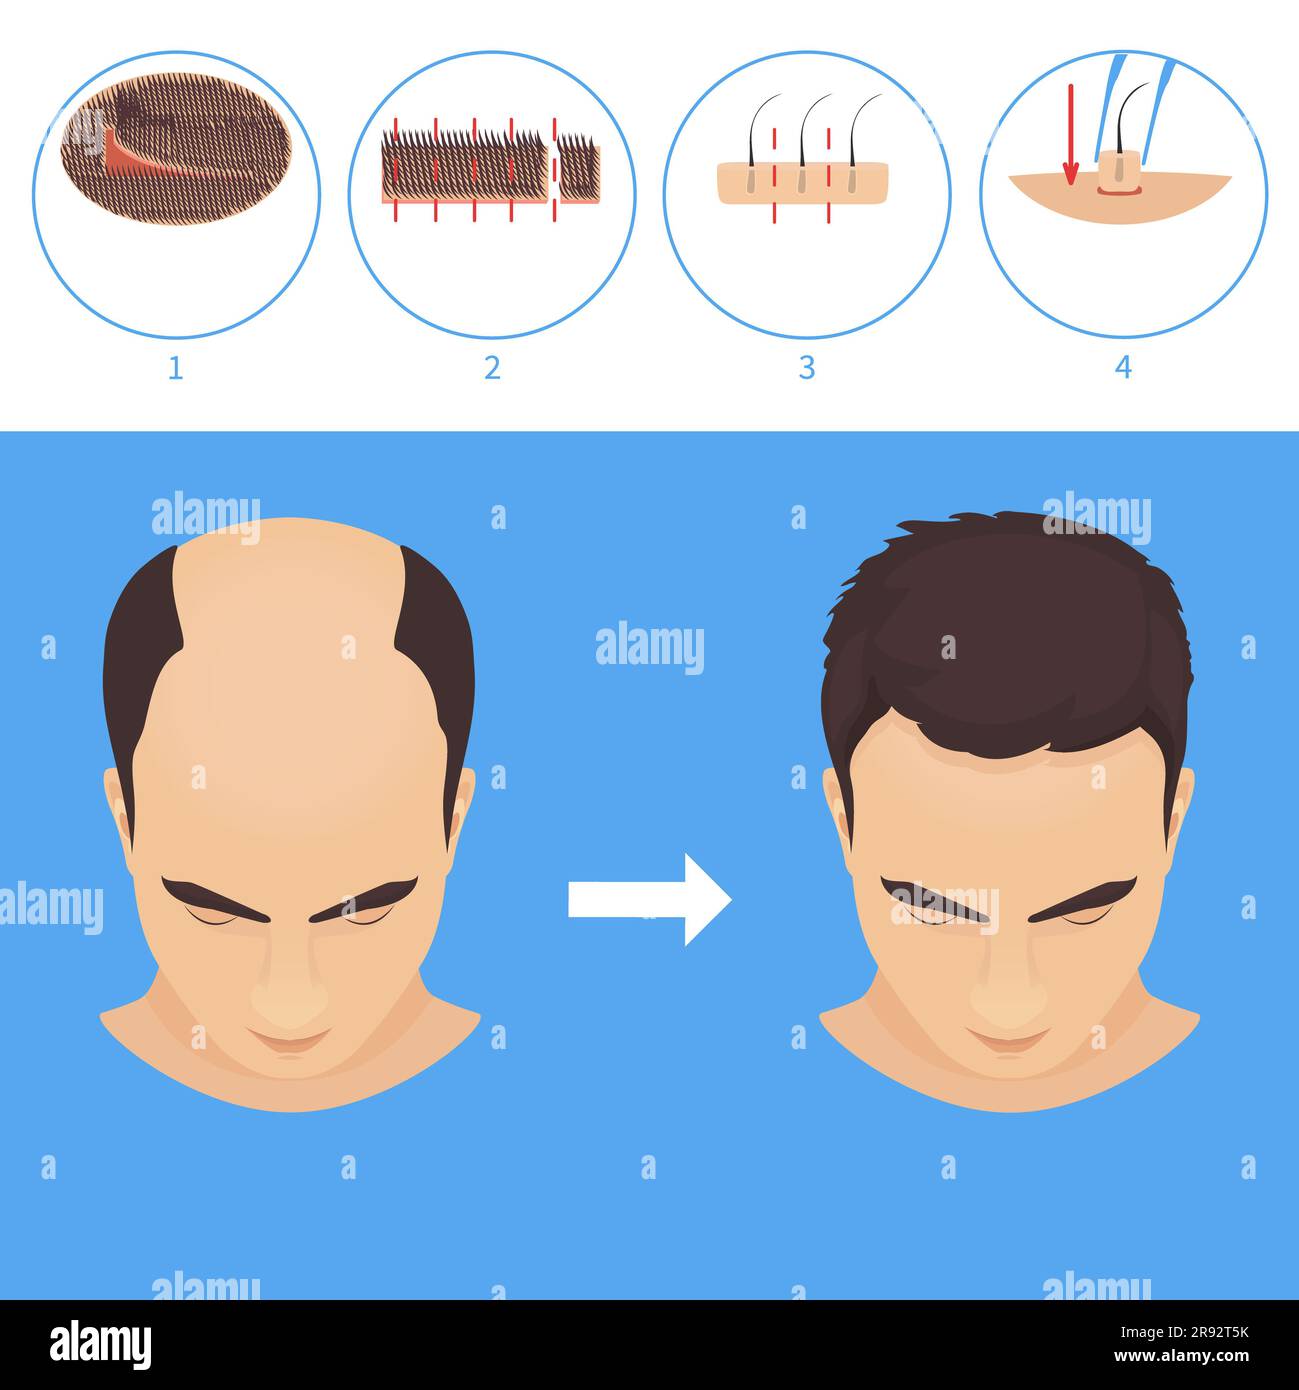 FUT hair transplantation, illustration Stock Photo